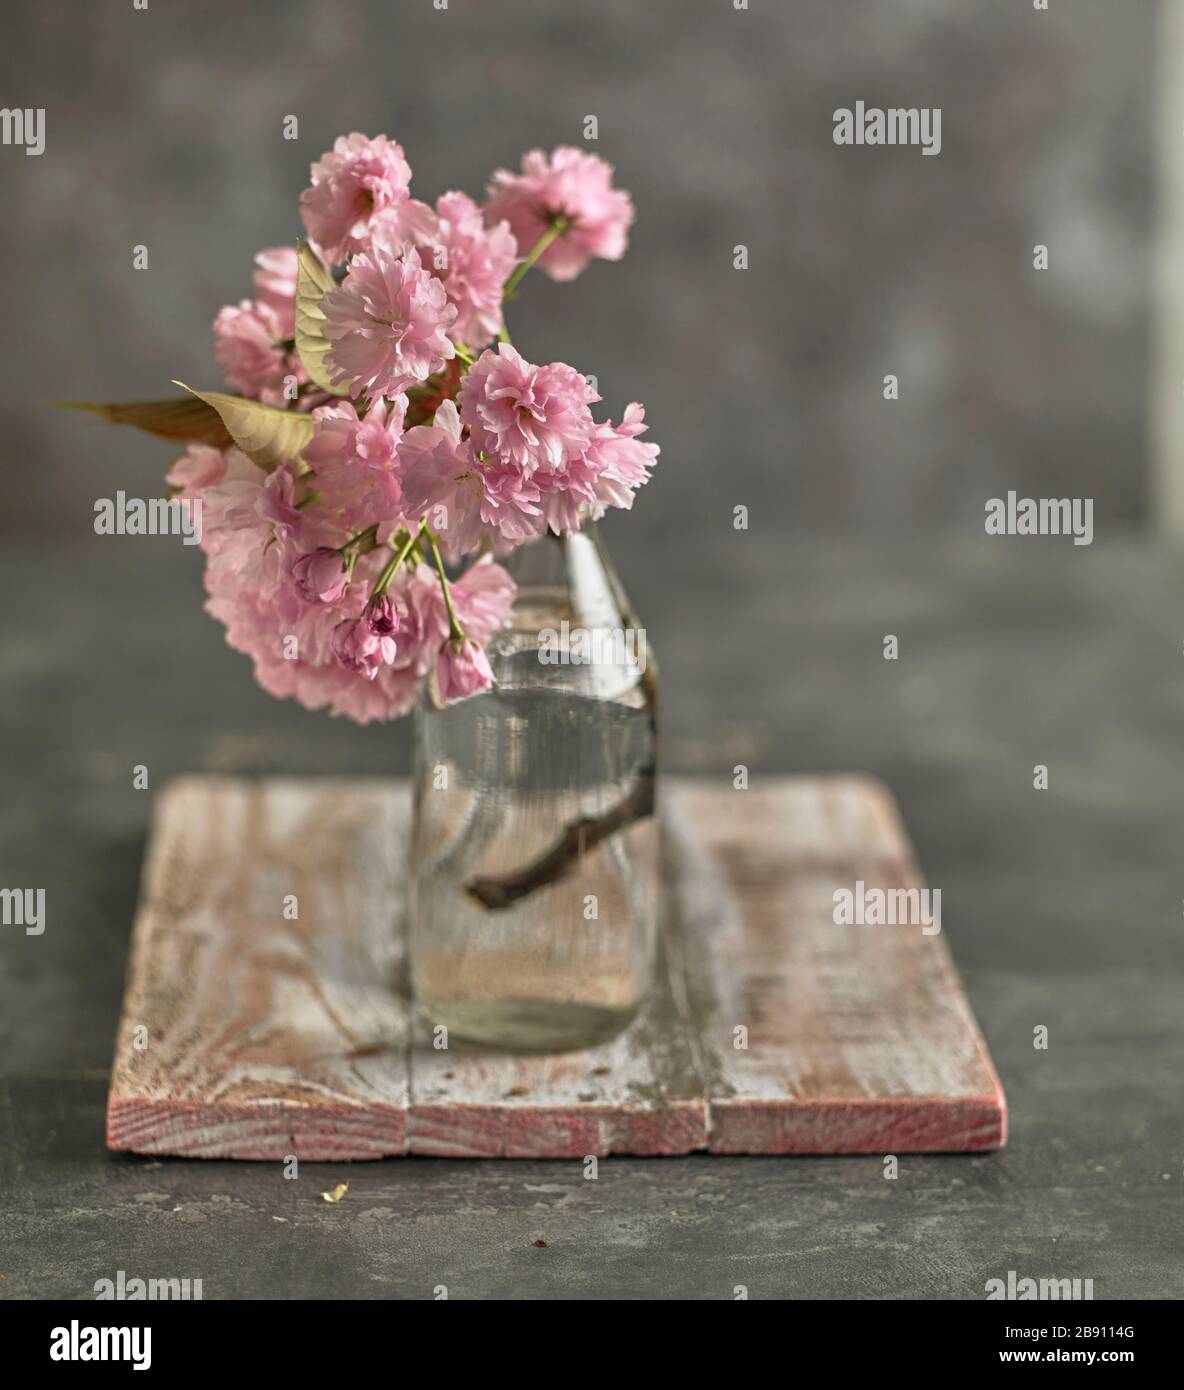 Cherry blossom in a milk bottle vase Stock Photo